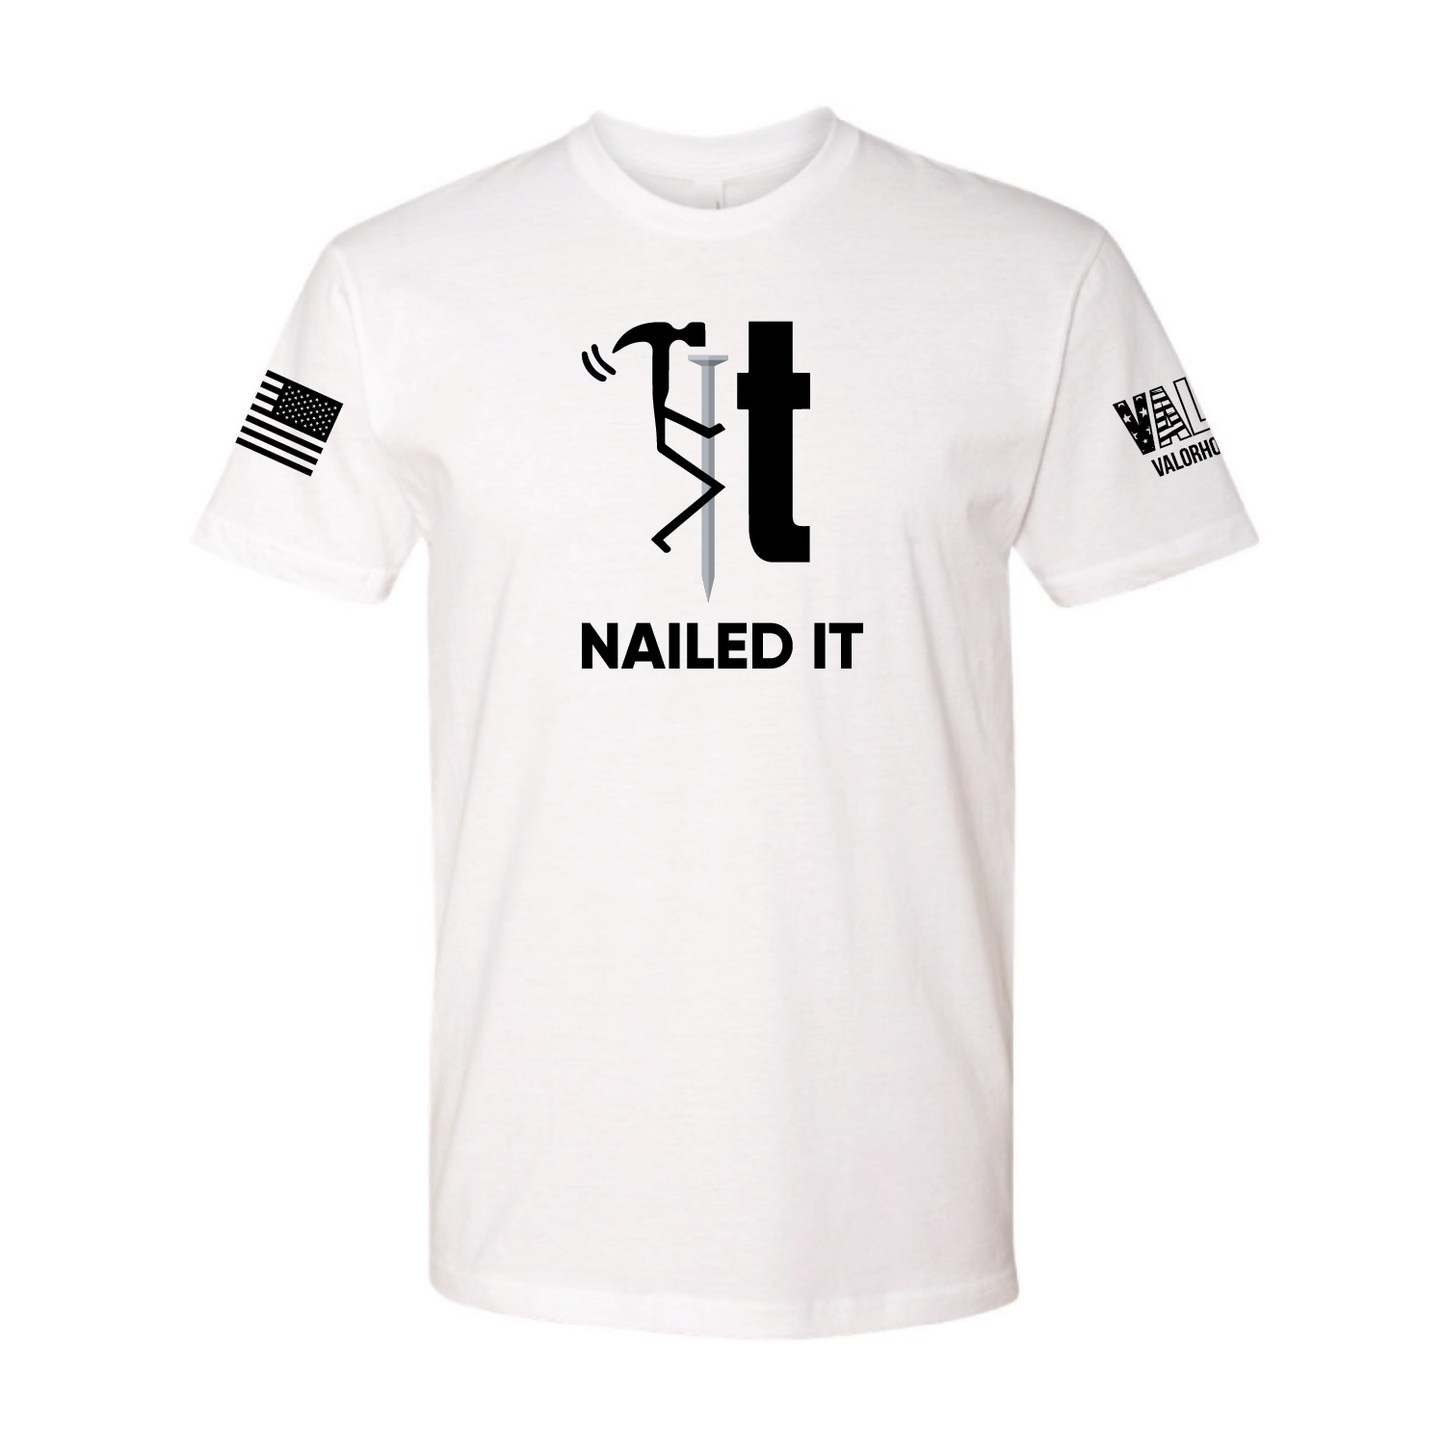 Gentlemen's 'Nailed It' Shirt